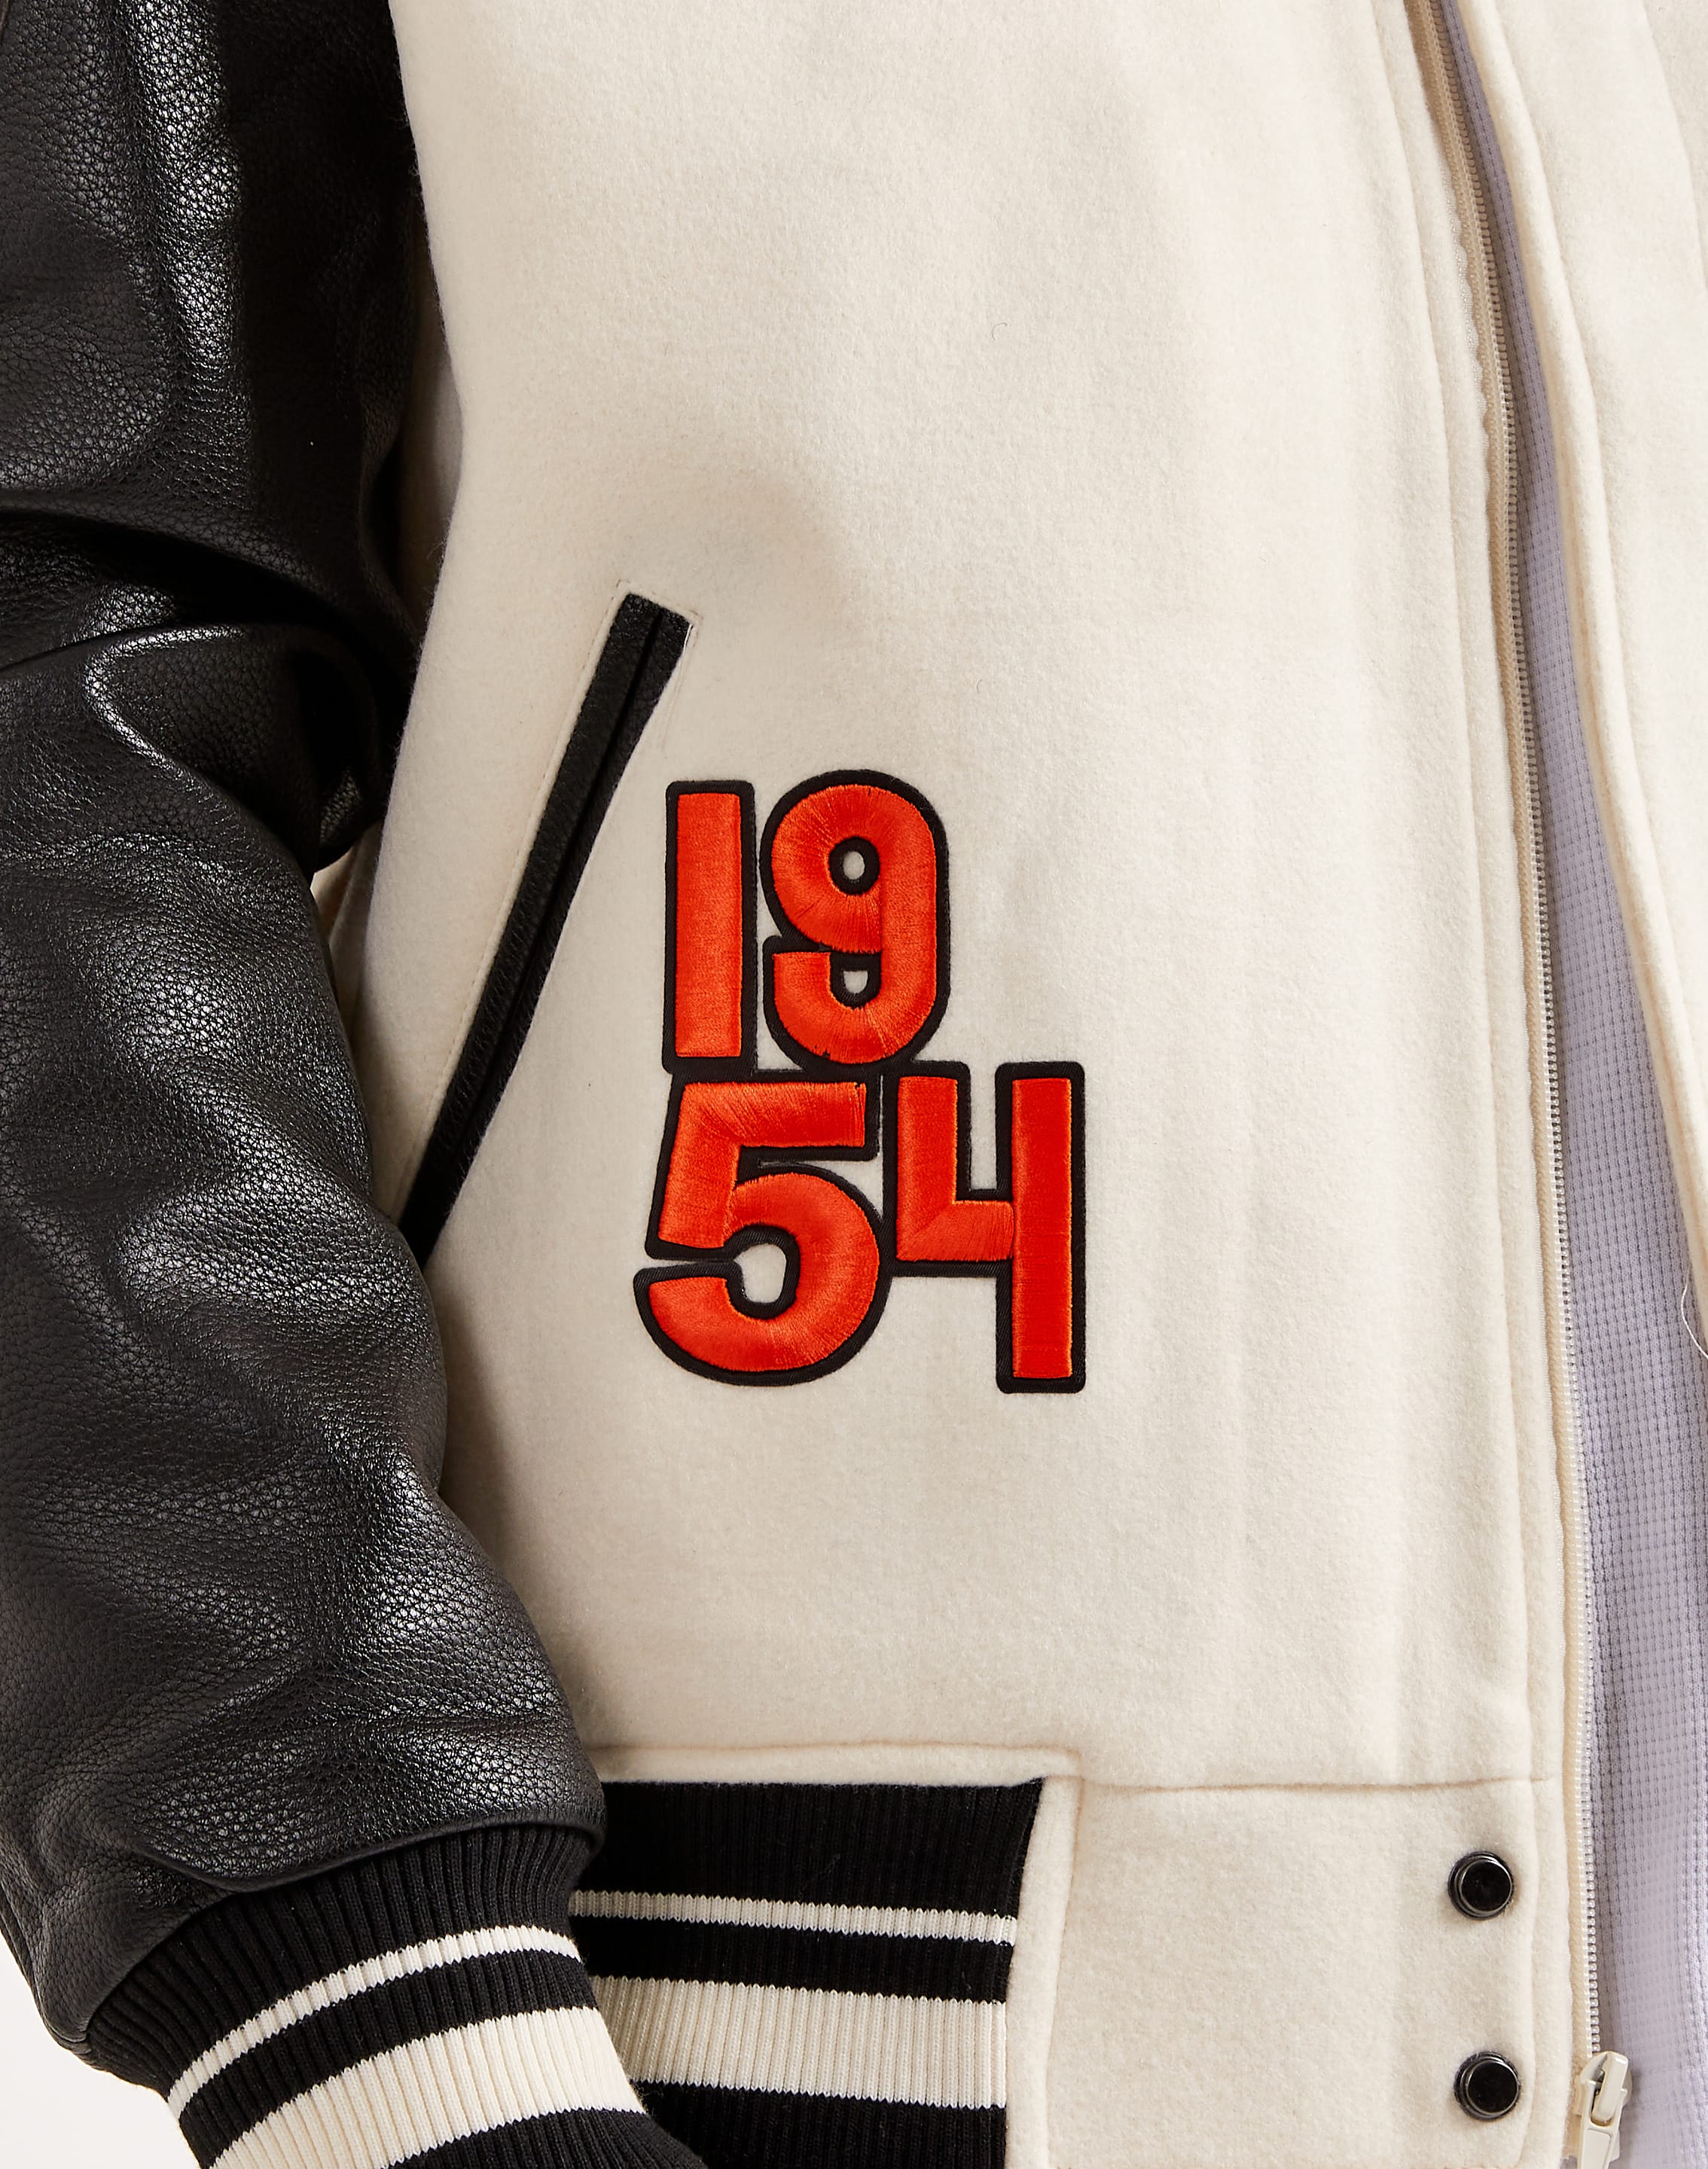 Baltimore Orioles Jacket